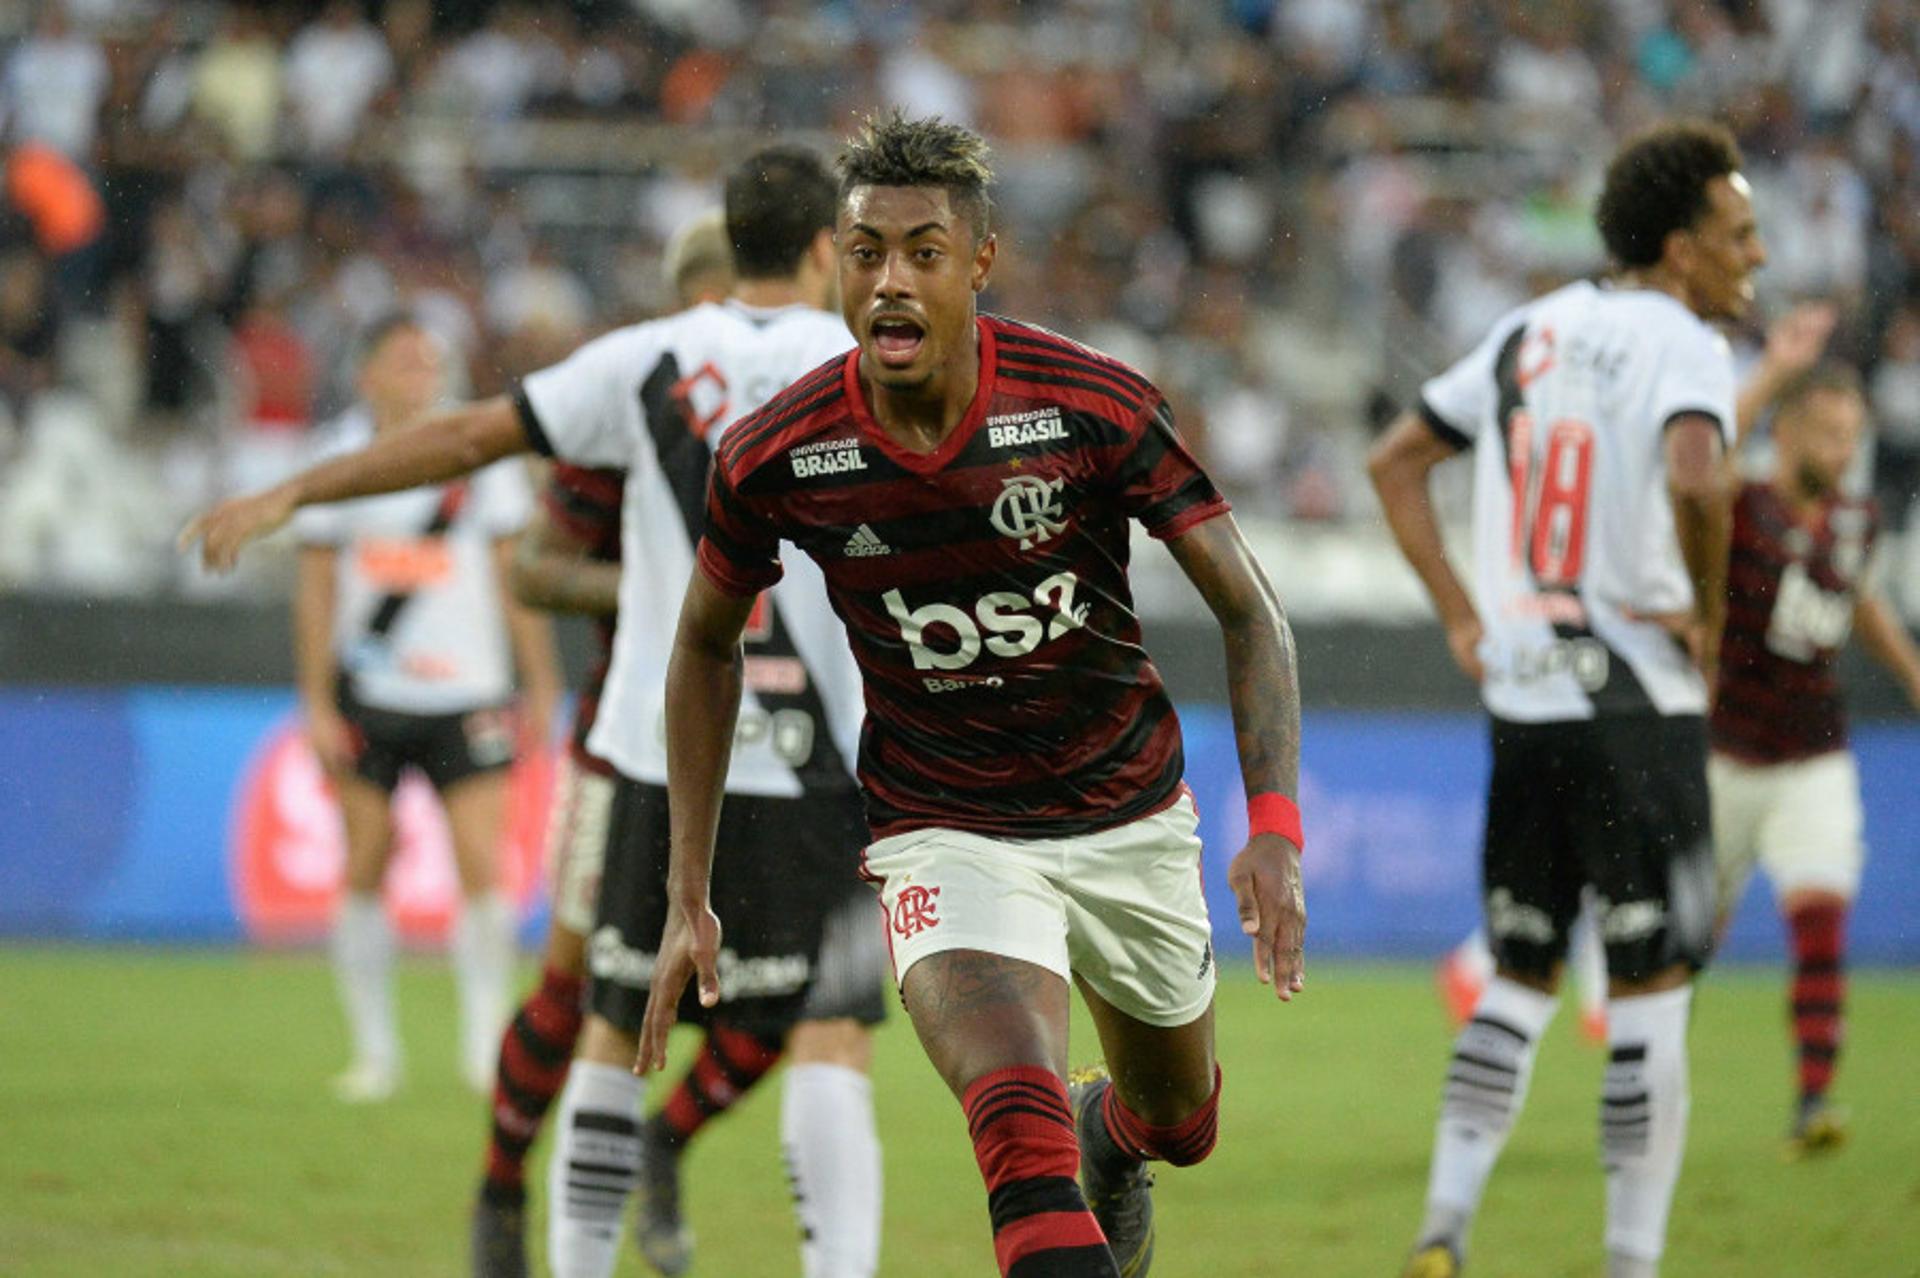 Vasco x Flamengo Bruno Henrique